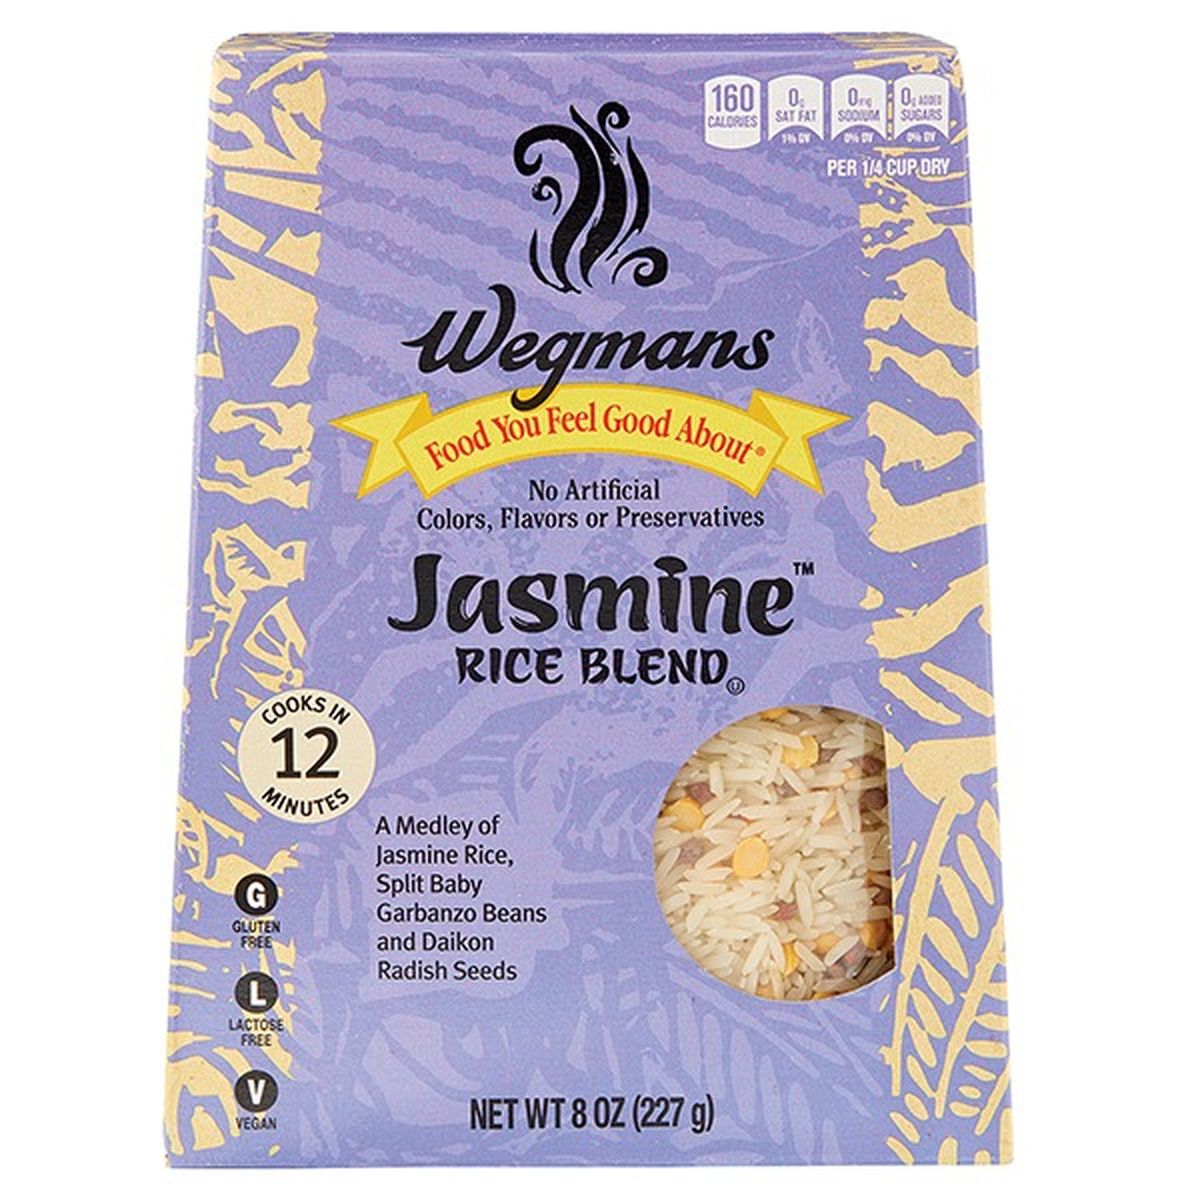 Calories in Wegmans Jasmine Rice Blend